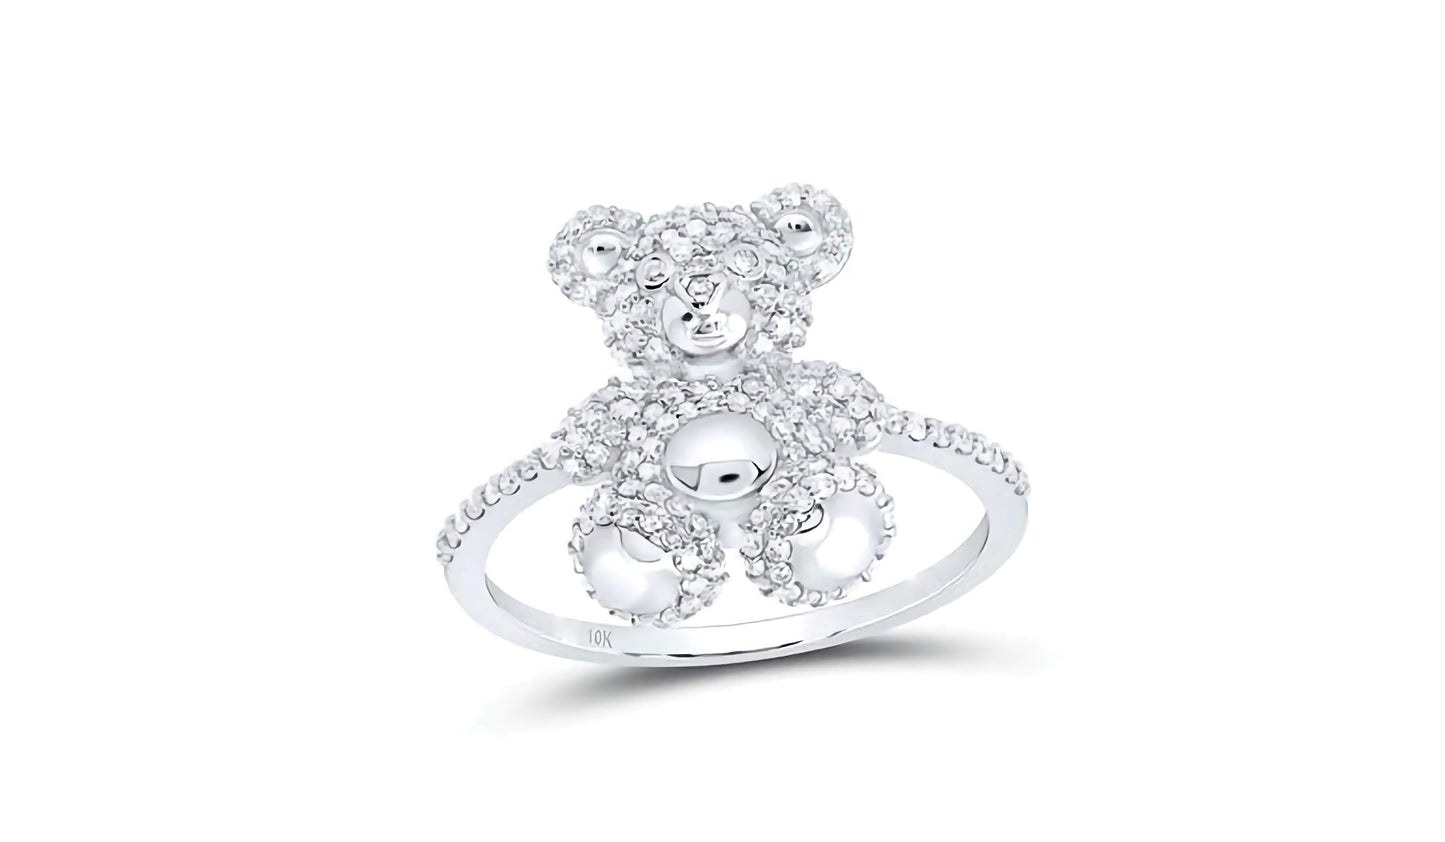 10k Teddy Bear Diamond Ring